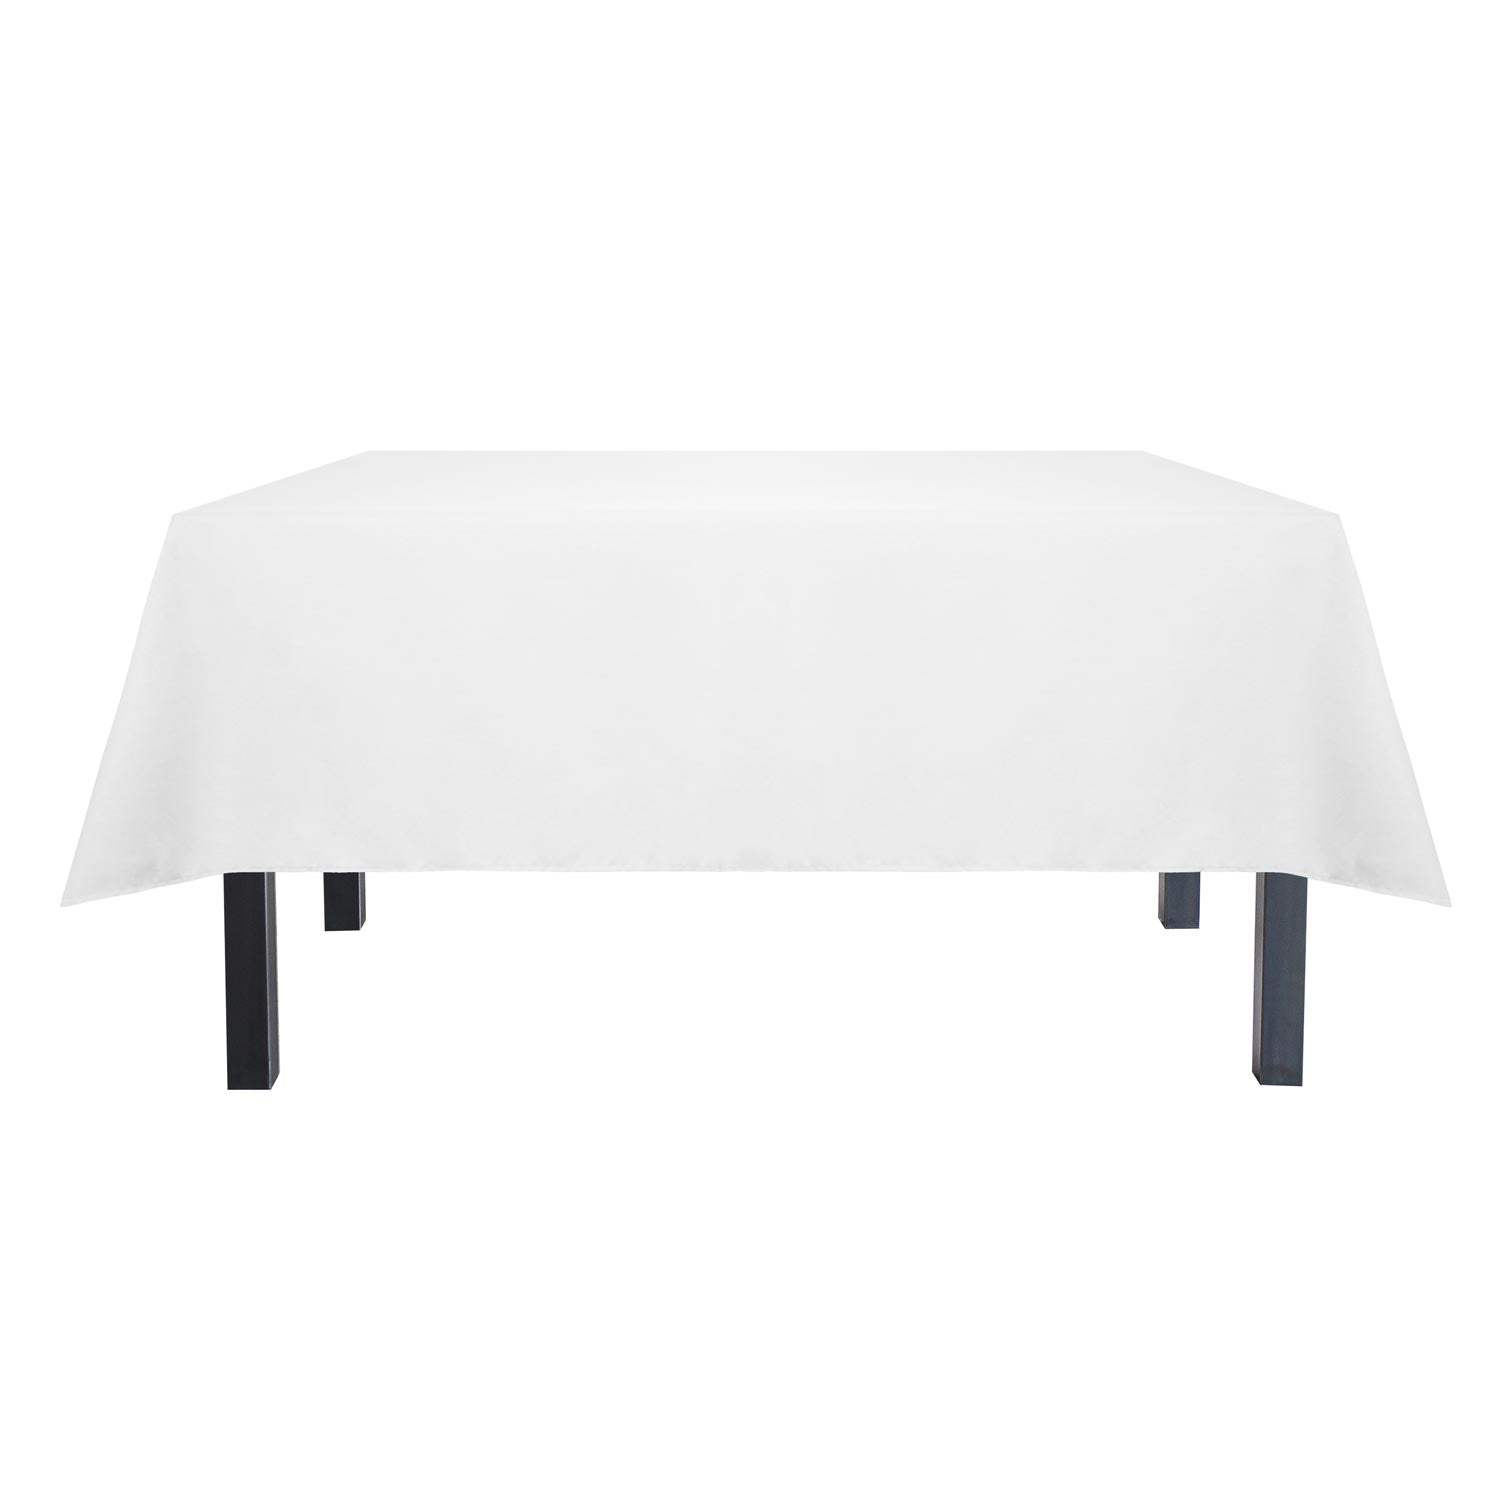 American Dawn | 52X96 Inch Milliken Signature White Tablecloth 